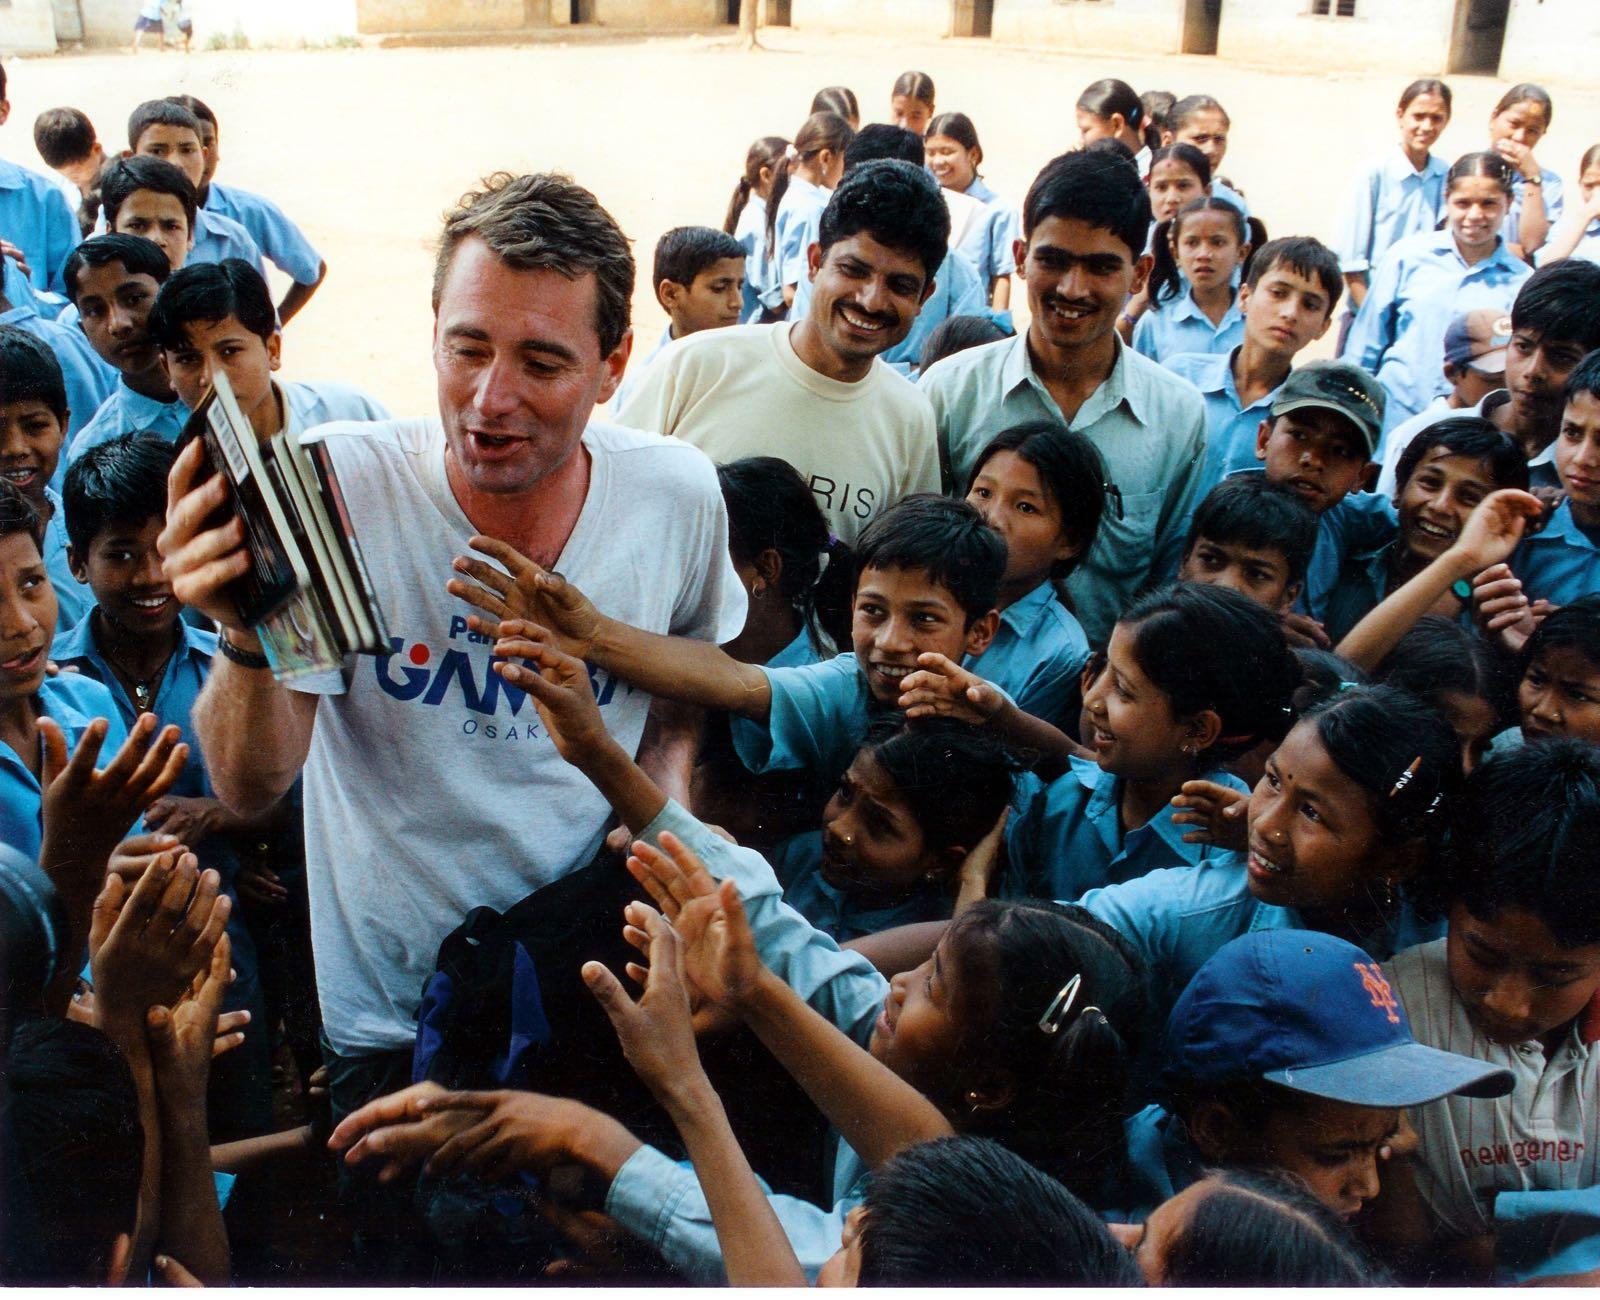 John Wood handing out books to Nepali children